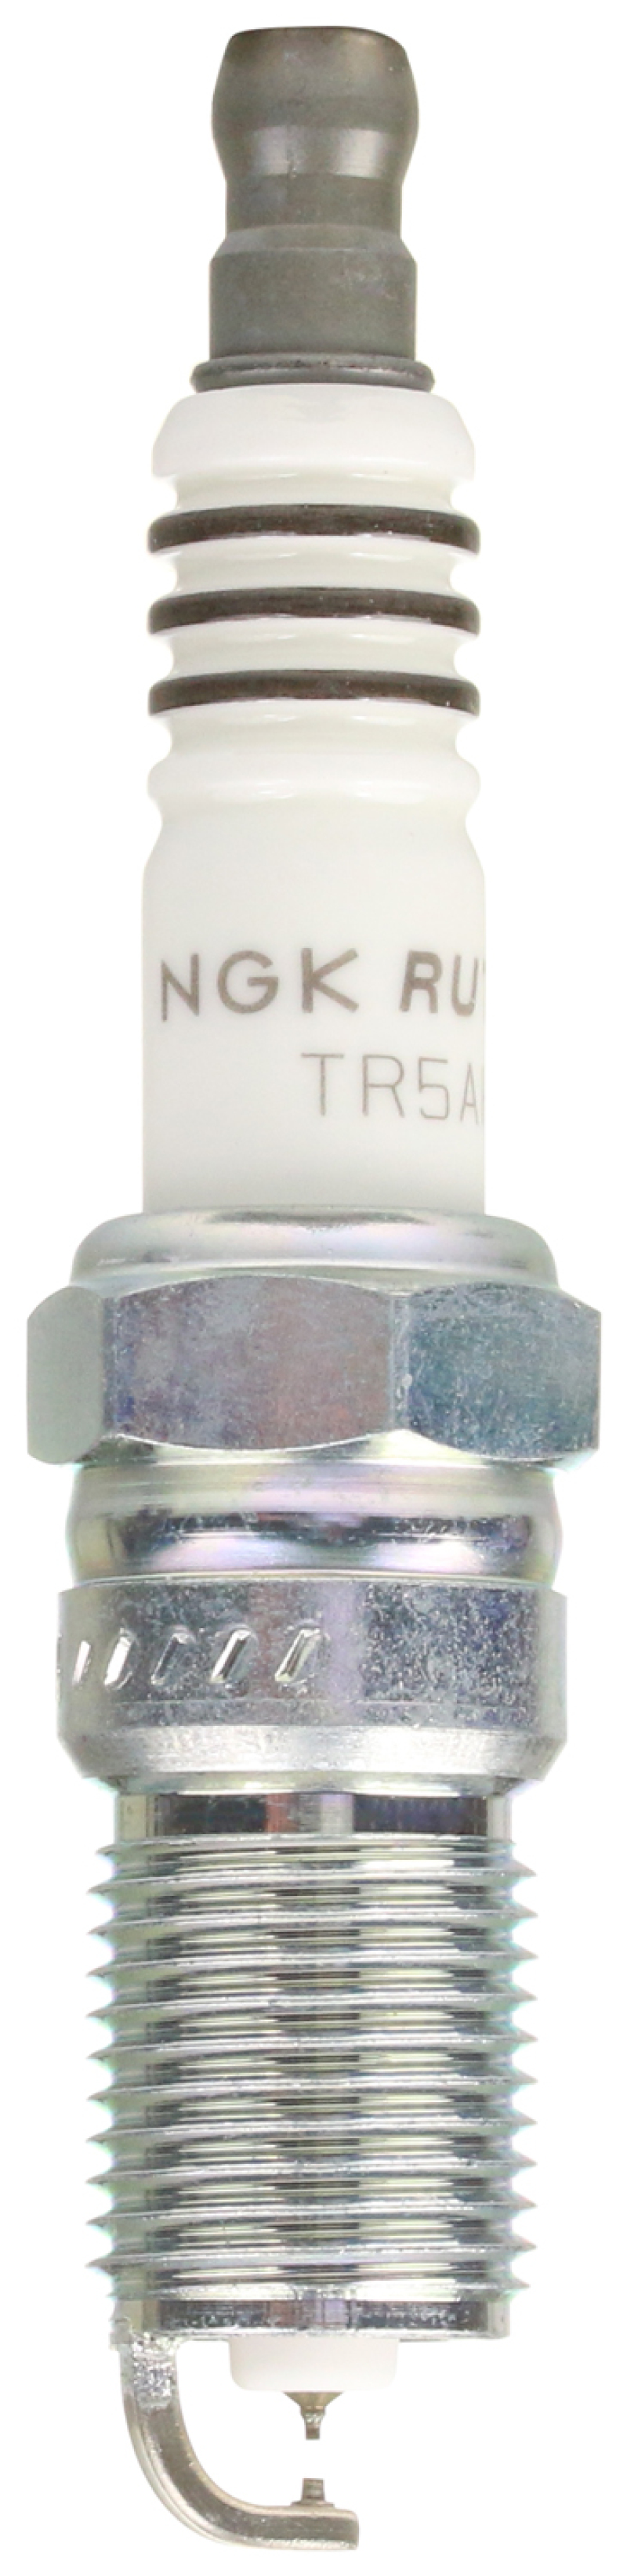 NGK Ruthenium HX Spark Plug Box of 4 (TR5AHX) - 94567